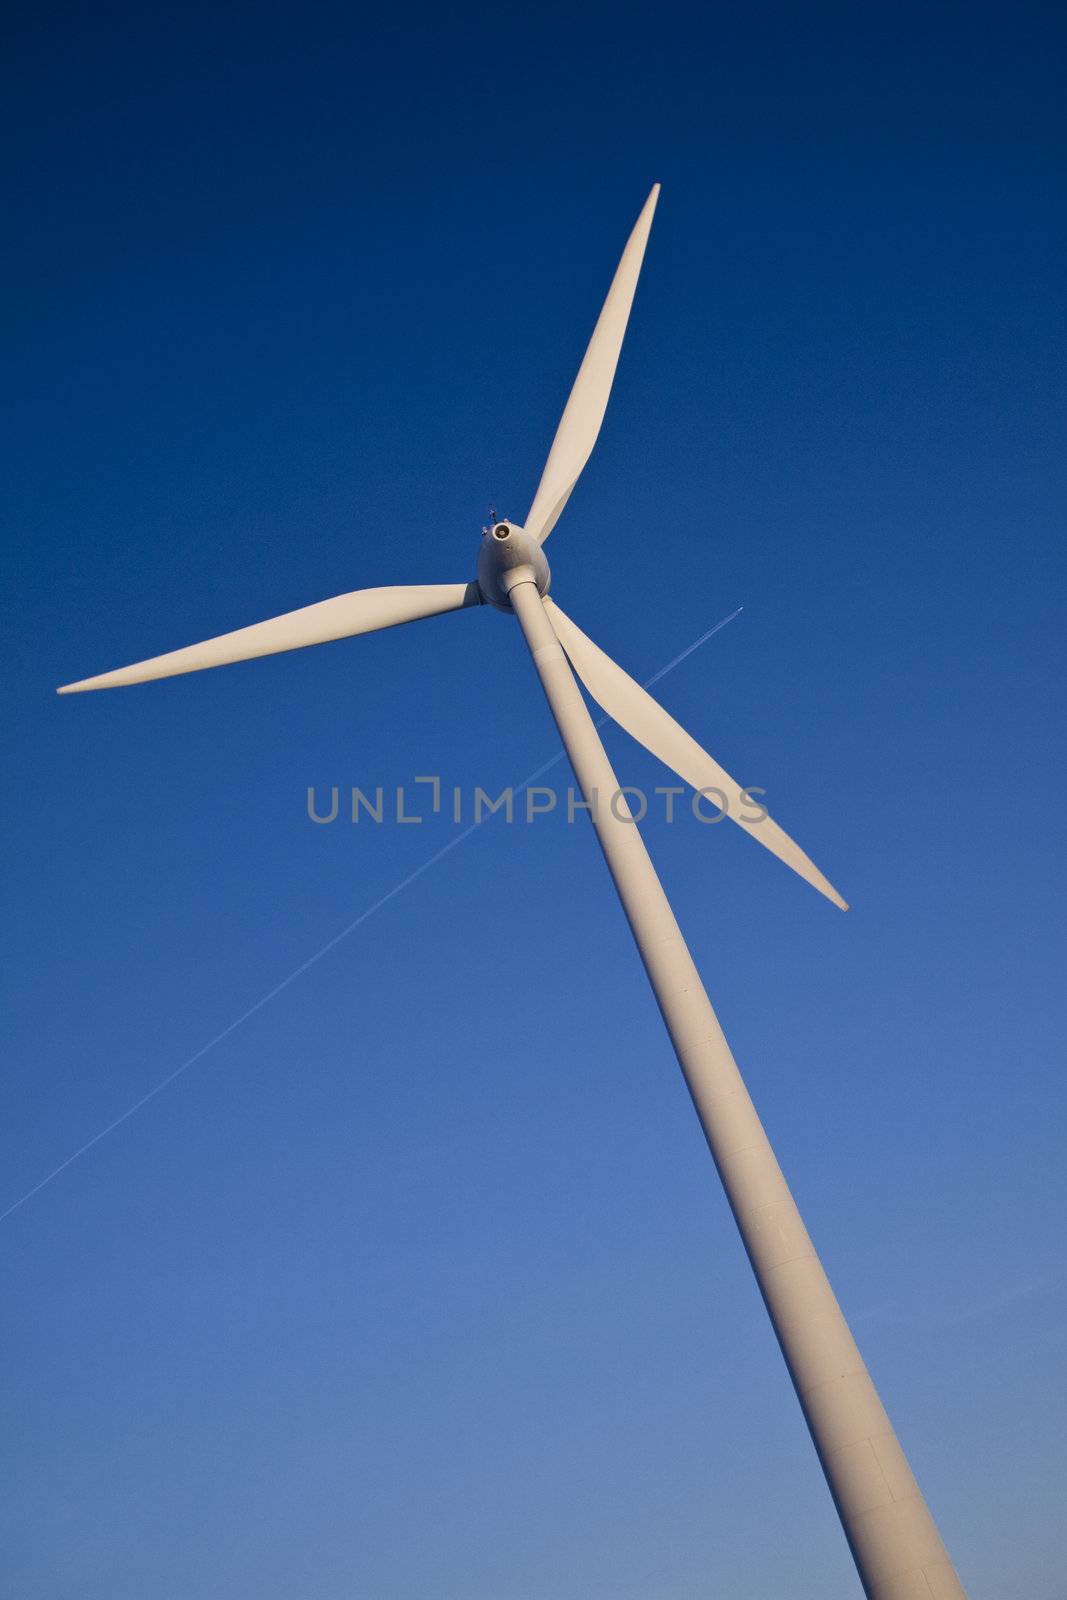 Windmill with plane trail by Gbuglok